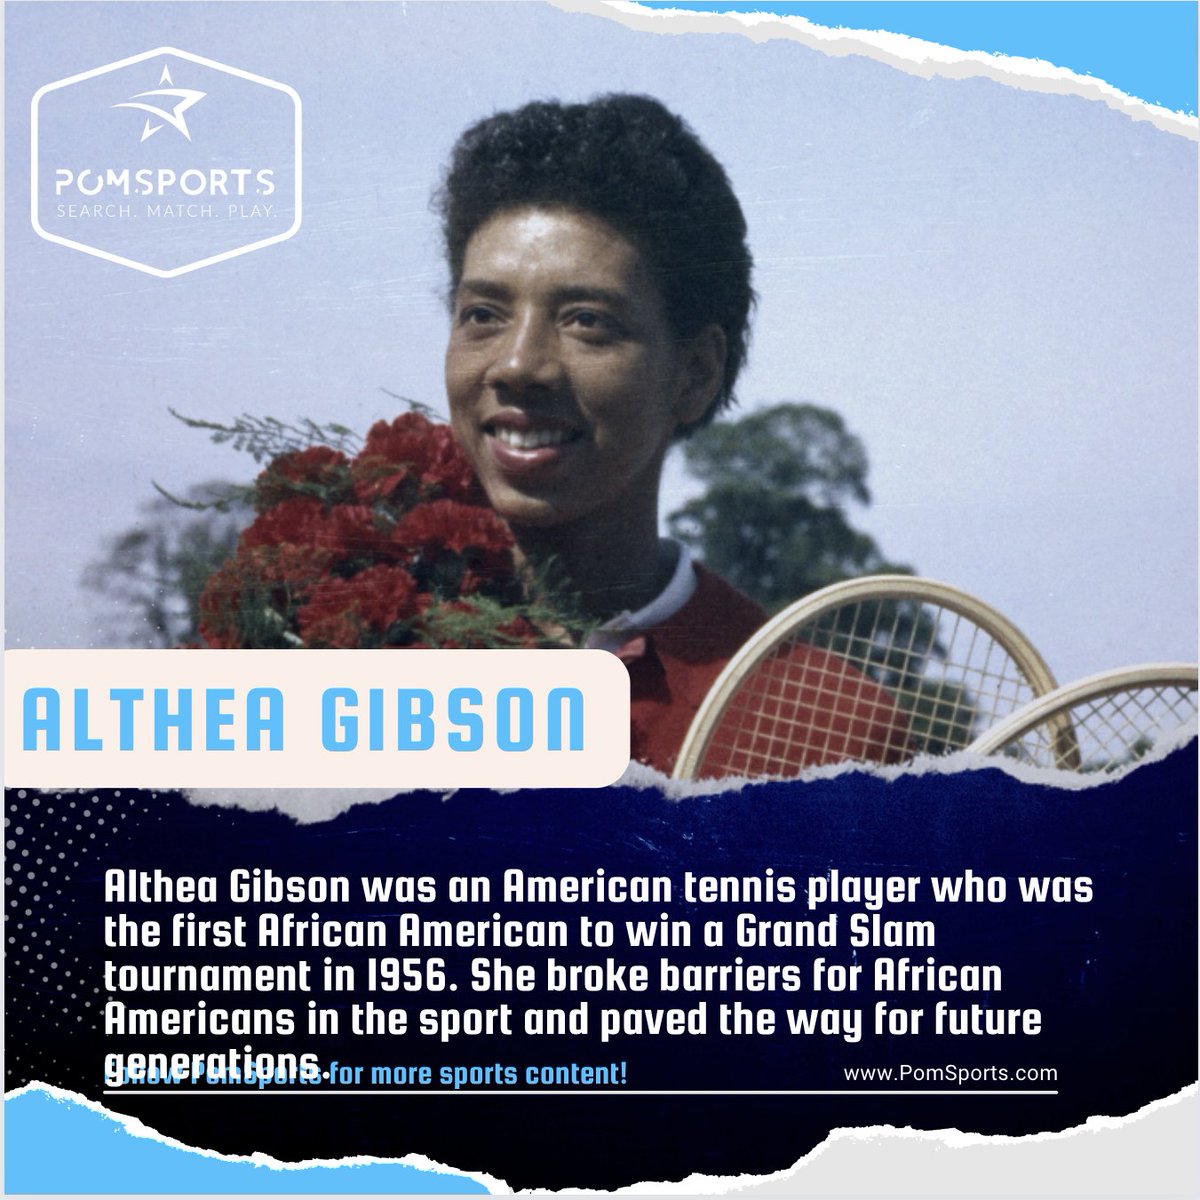 Celebrating Black History Month!
Cheers to ALTHEA GIBSON!

#altheagibson #tennisplayer #tennis  #athlete #blackhistorymonth2023 #olympics #sportsperson #sports #BlackHistory #BlackHistoryMonth